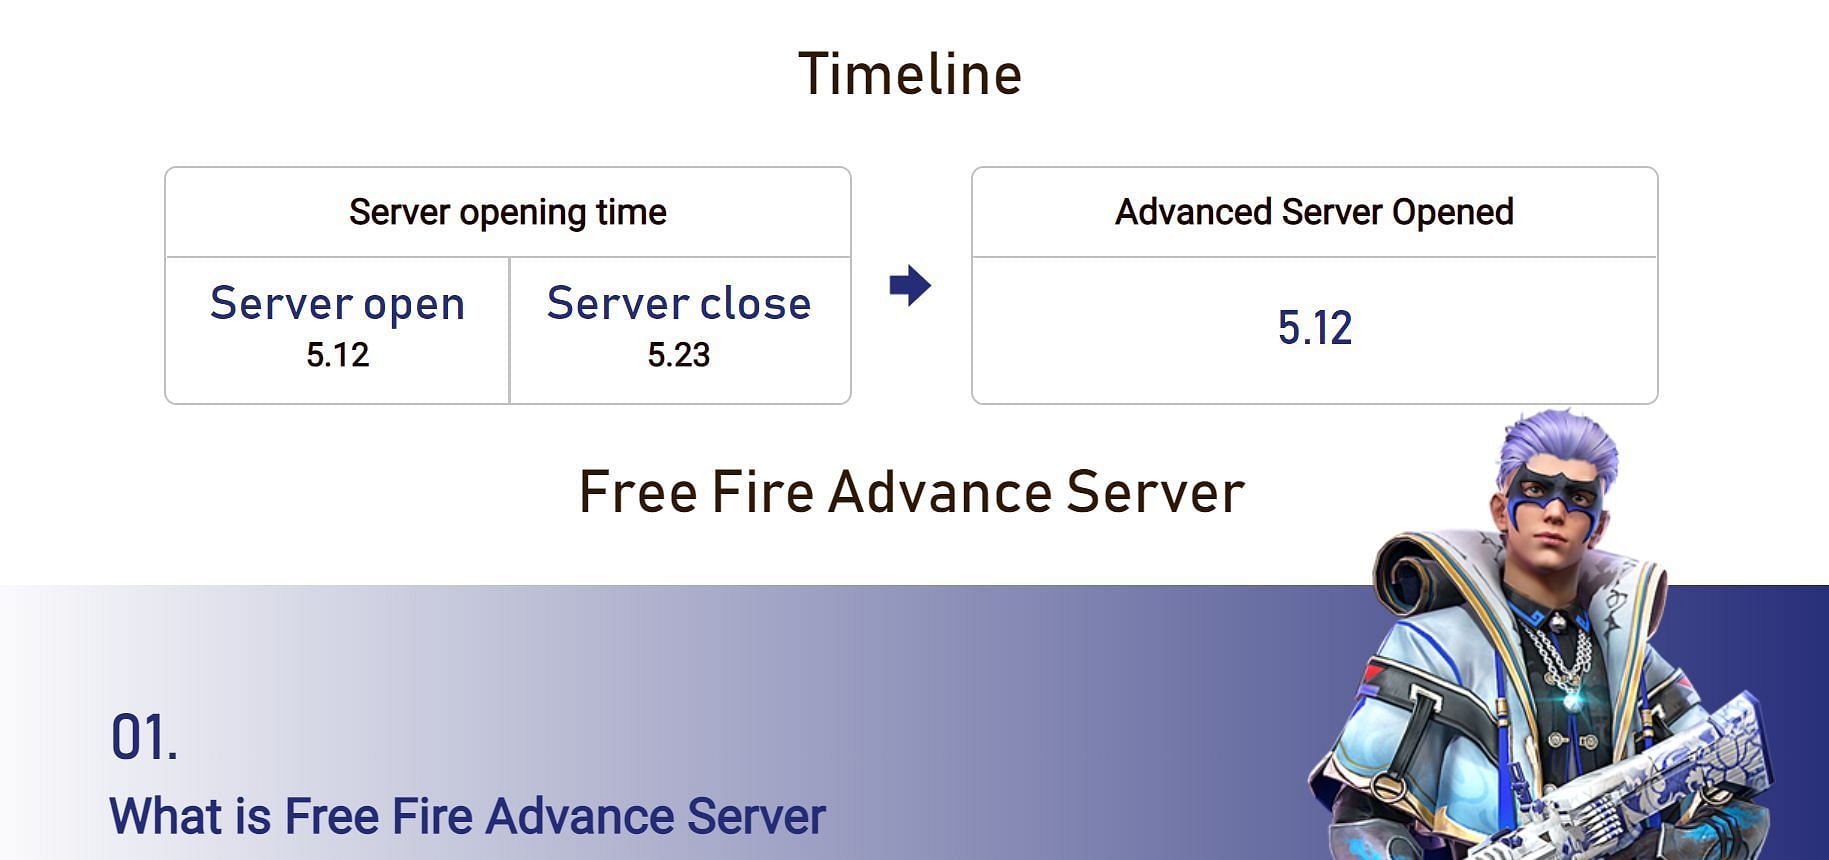 Here's the timeline for the premium server (image via Garena)